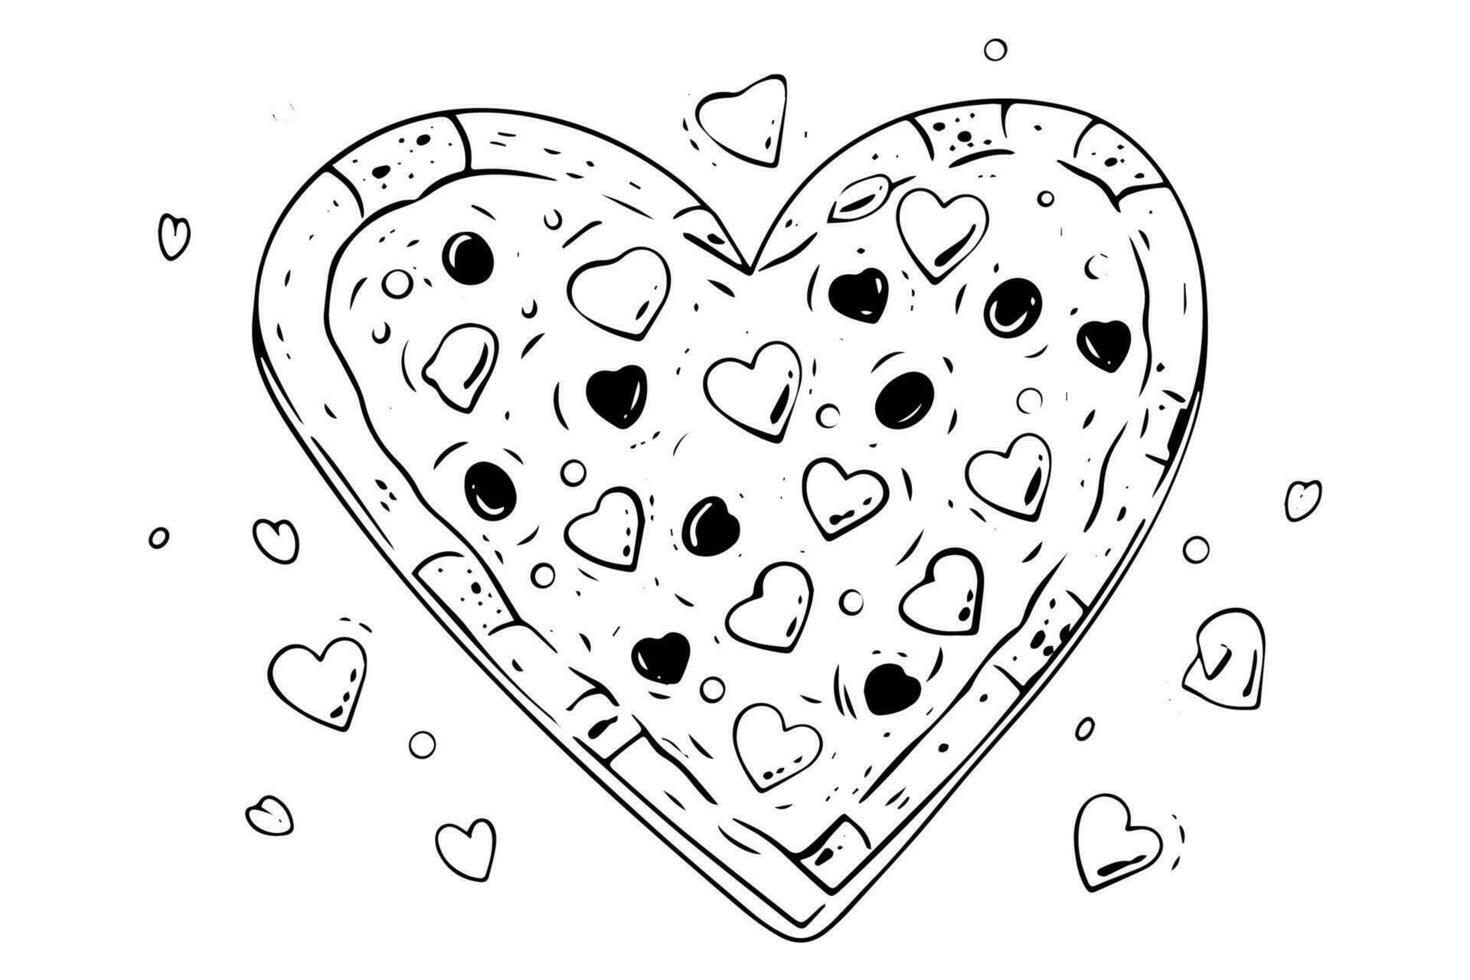 Slice of pizza lover ink sketch. Engraving style vector illustration. Art for print, design, banner.